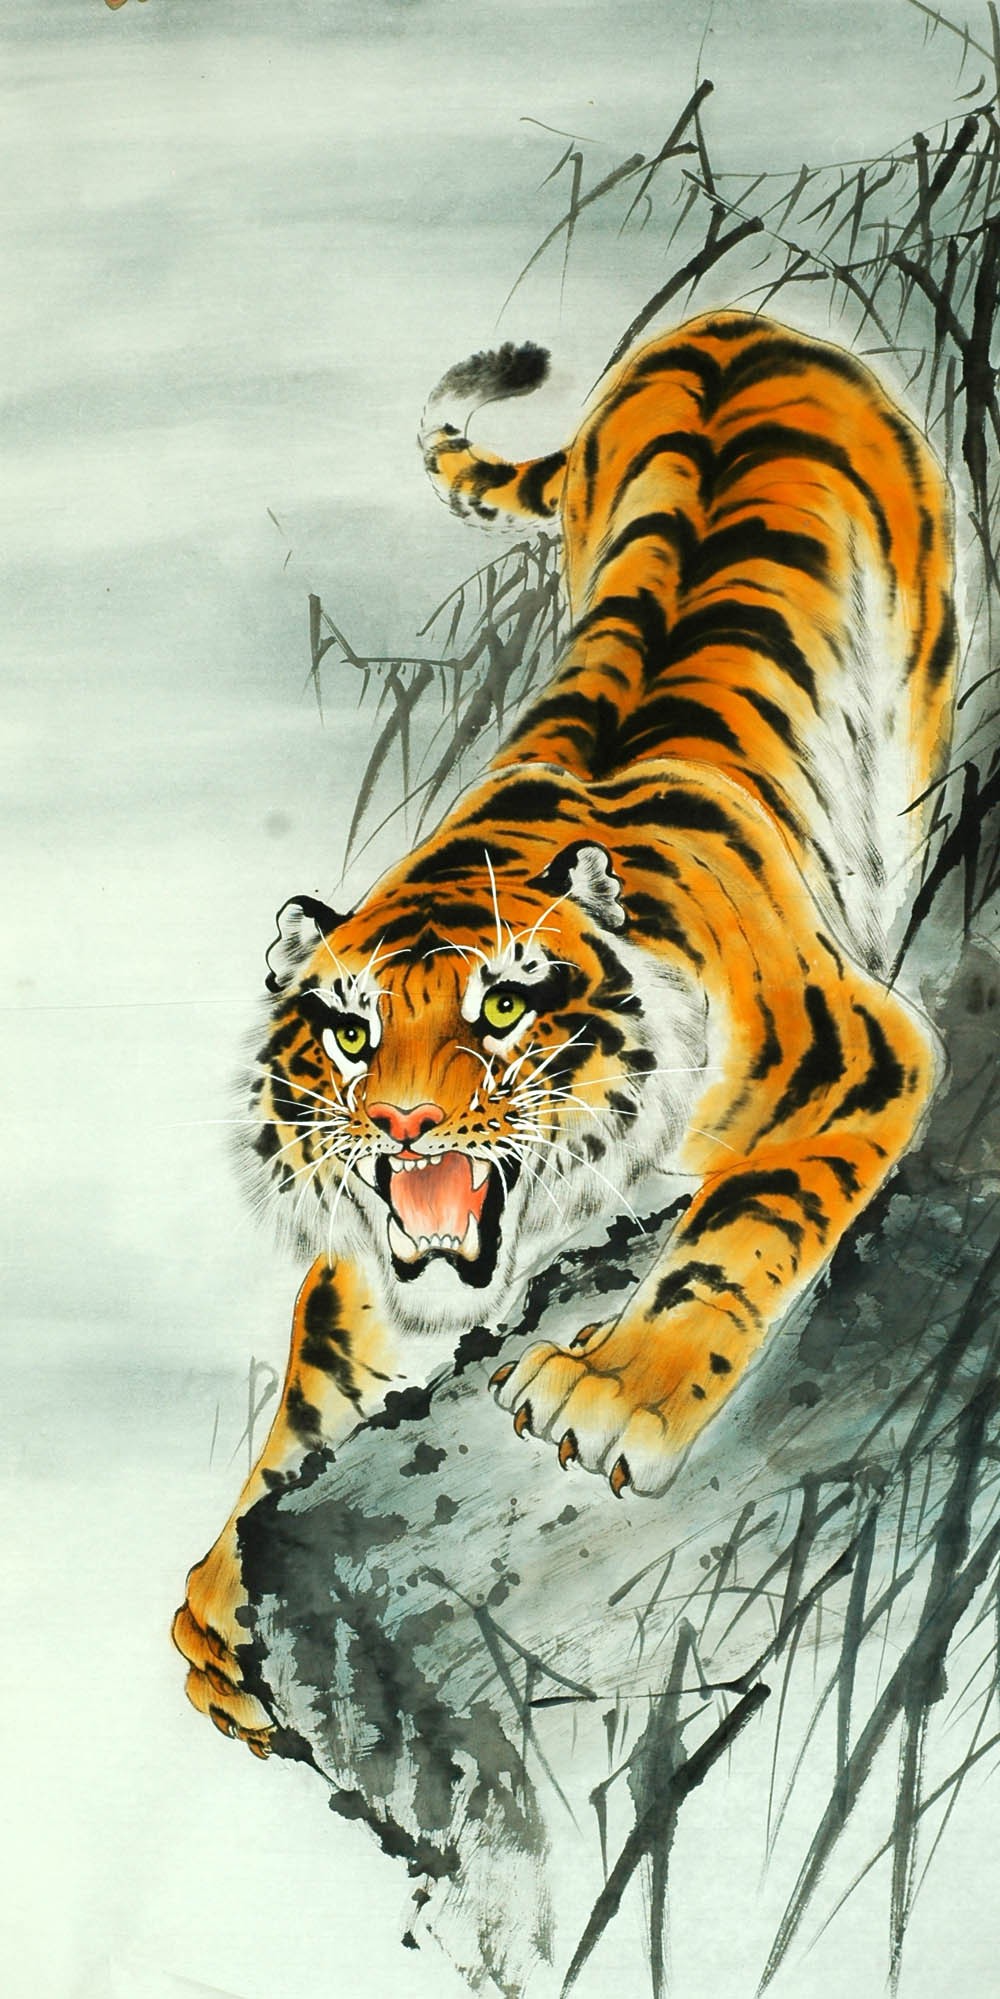 Chinese Tiger Painting - CNAG008856